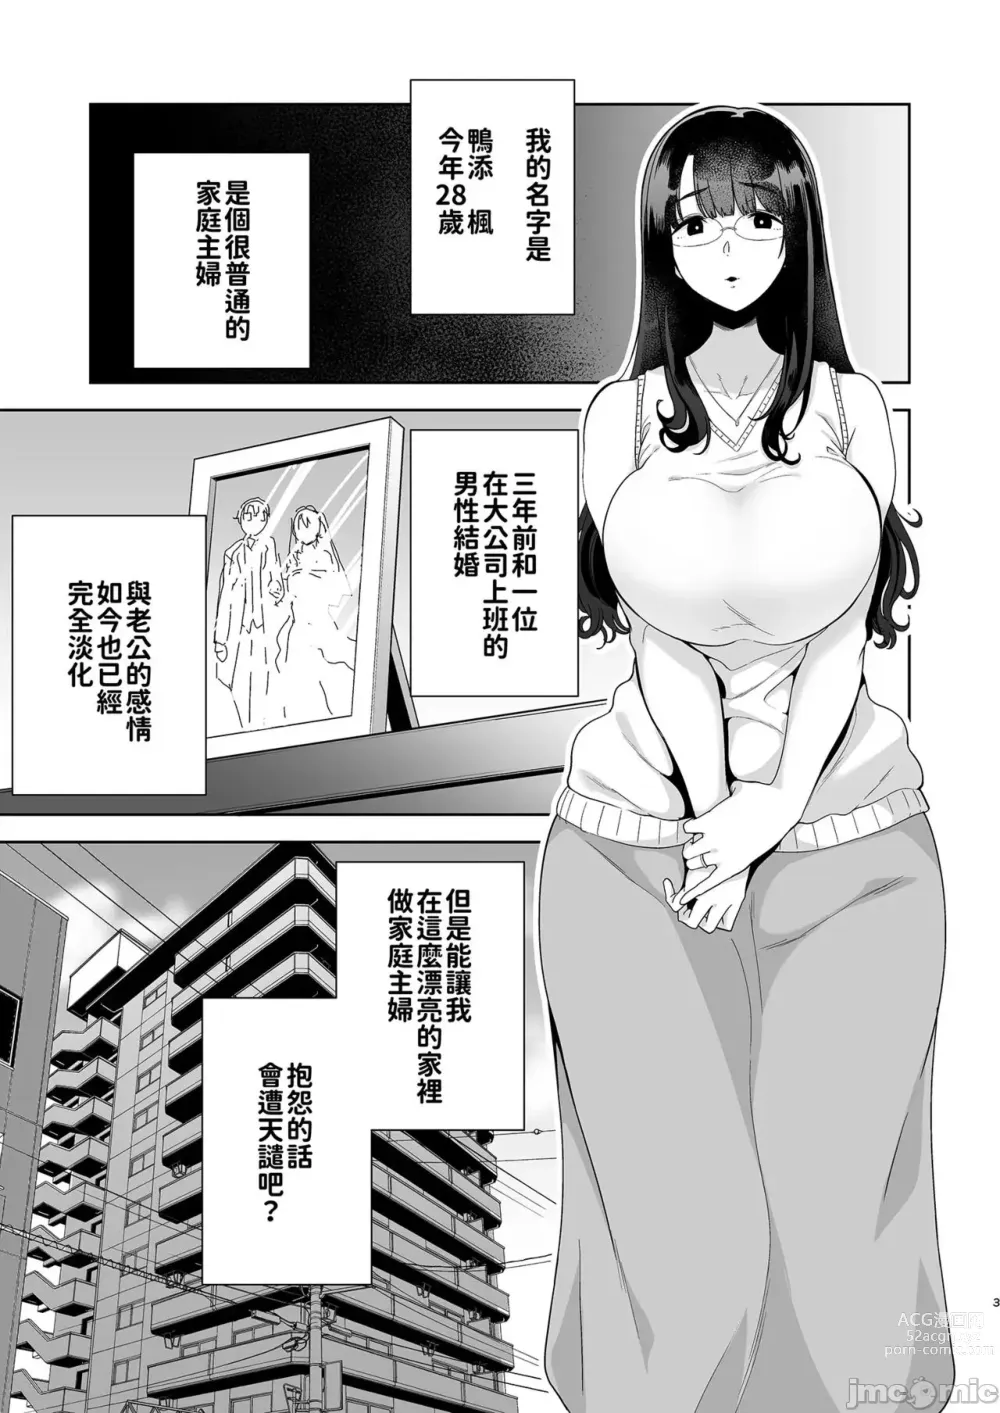 Page 3 of manga ワイルド式日本人妻の寝取り方 其ノ一&二&三&四 眼鏡あり.ver